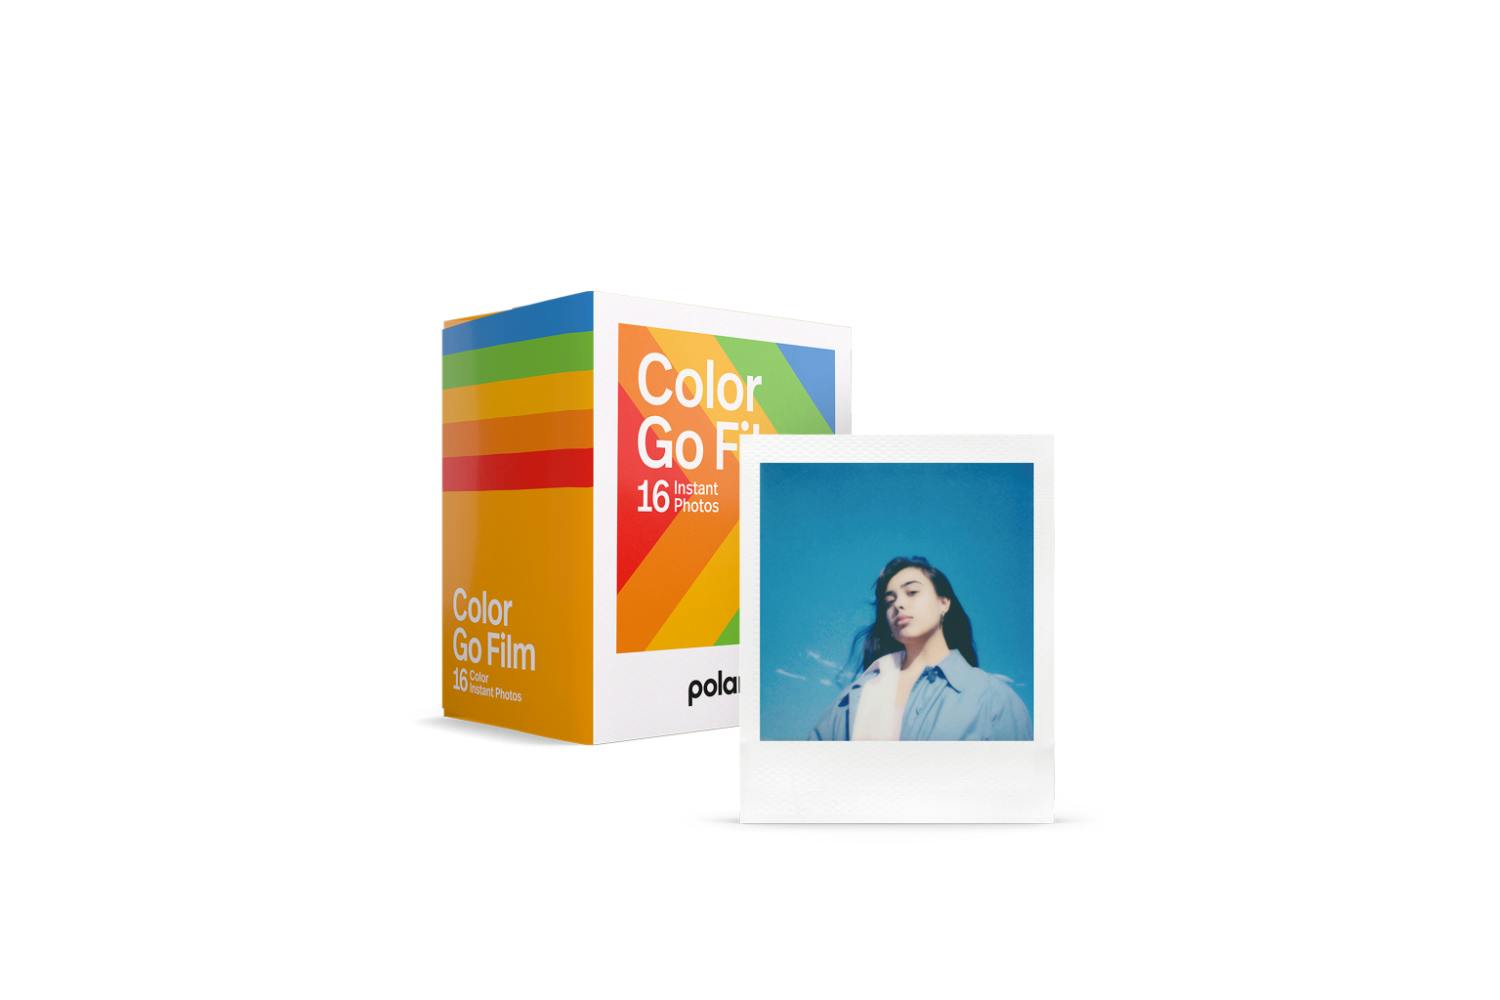 Polaroid Go Film-Double Pack 6017 - Best Buy